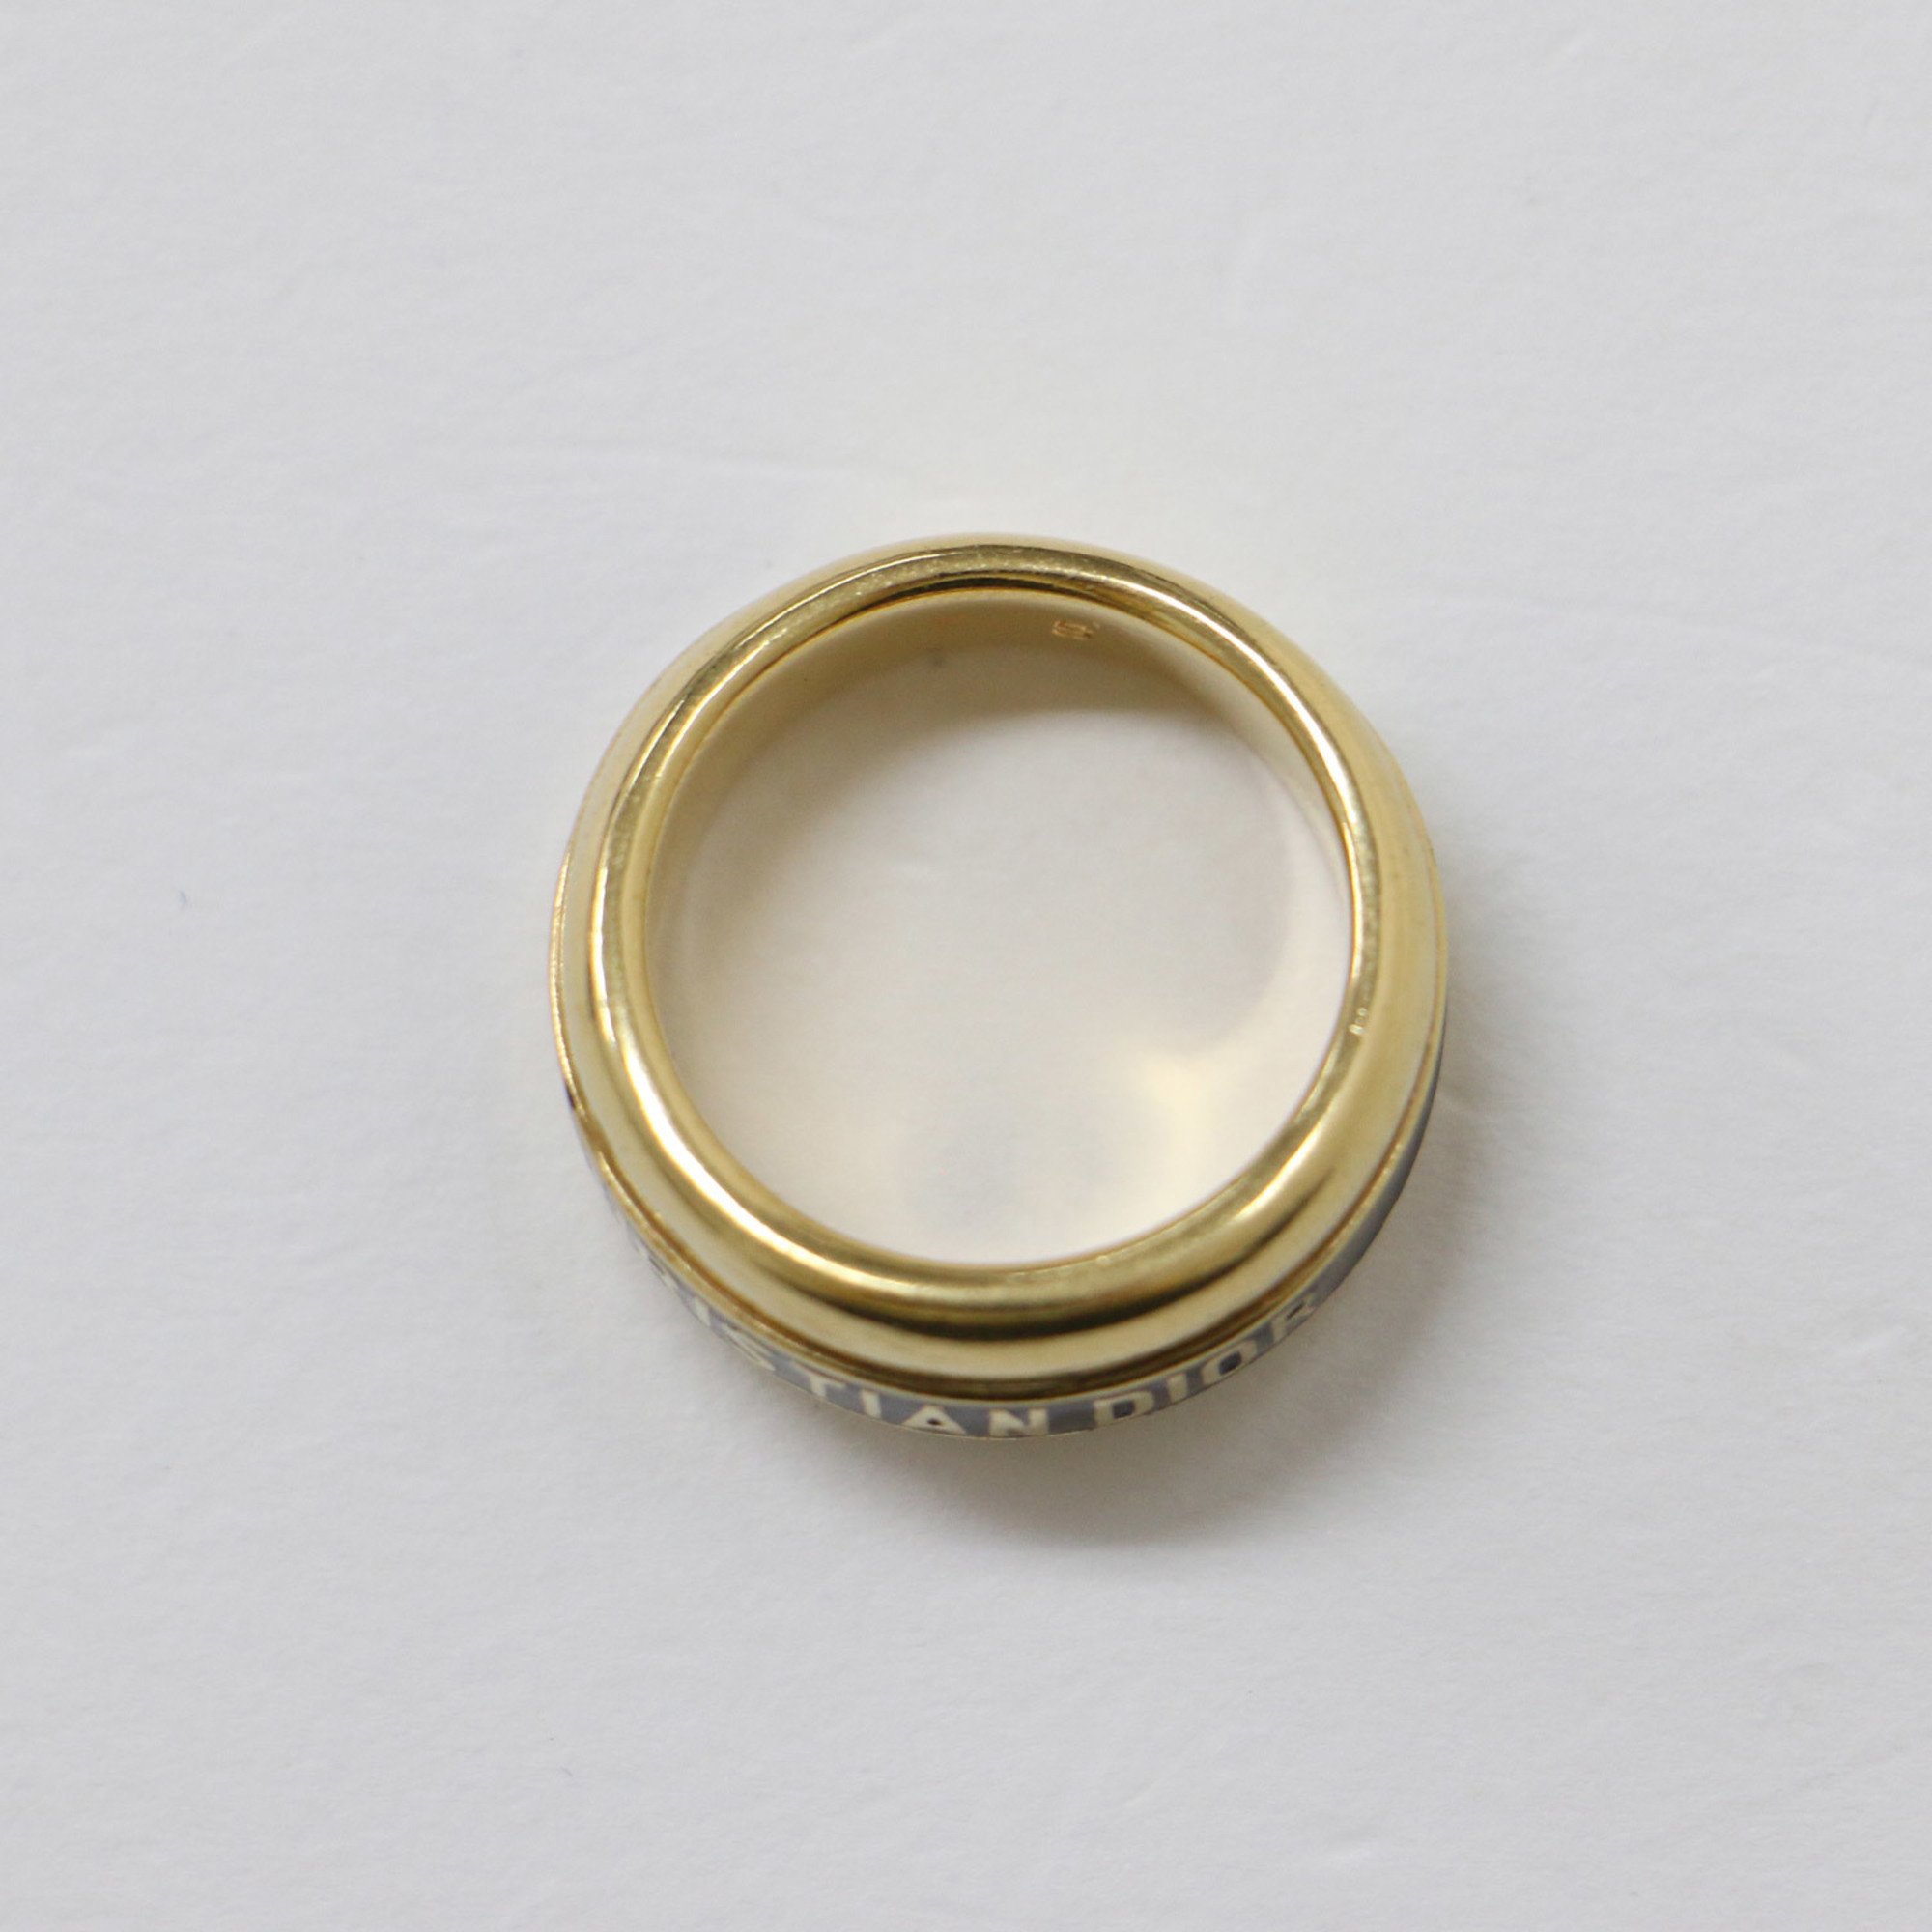 Christian Dior Ring Gold Black Code CODE Metal GP Women's